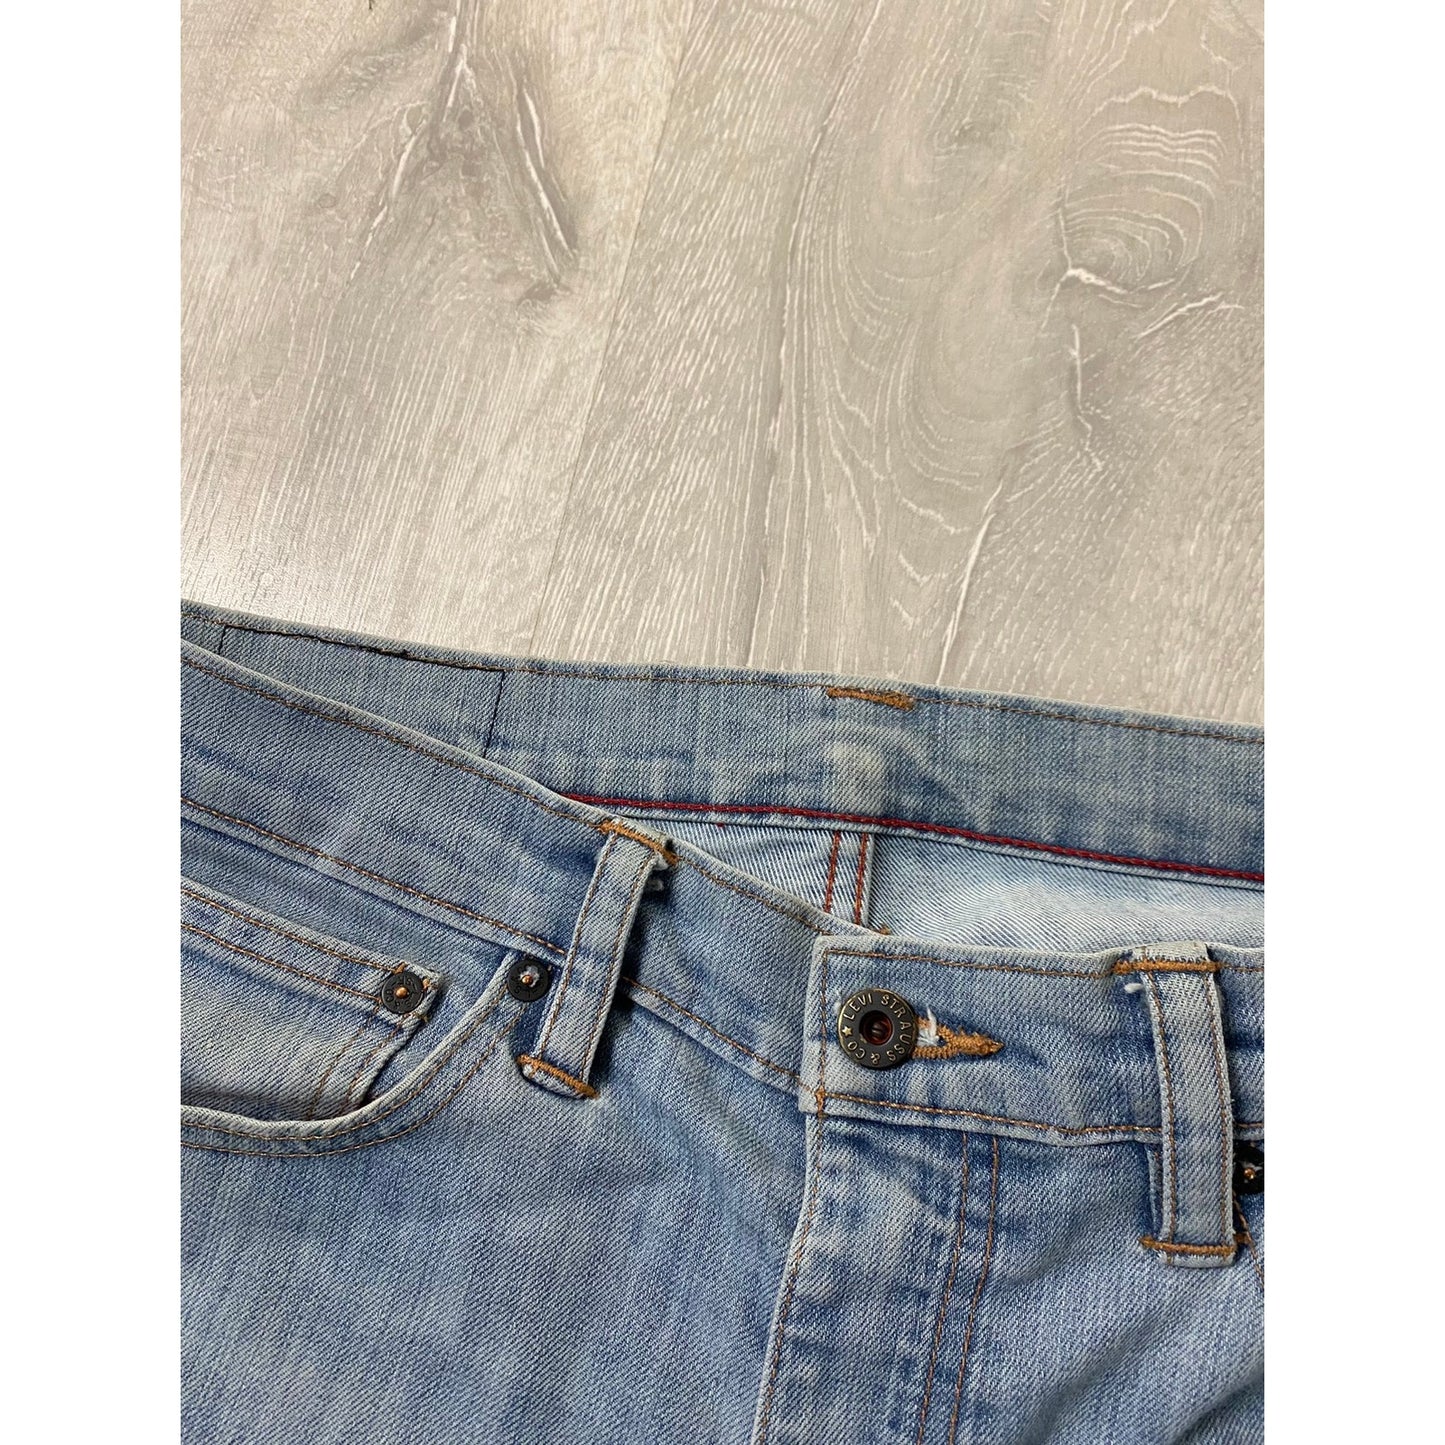 Levi’s 513 vintage baby blue jeans black tab denim pants